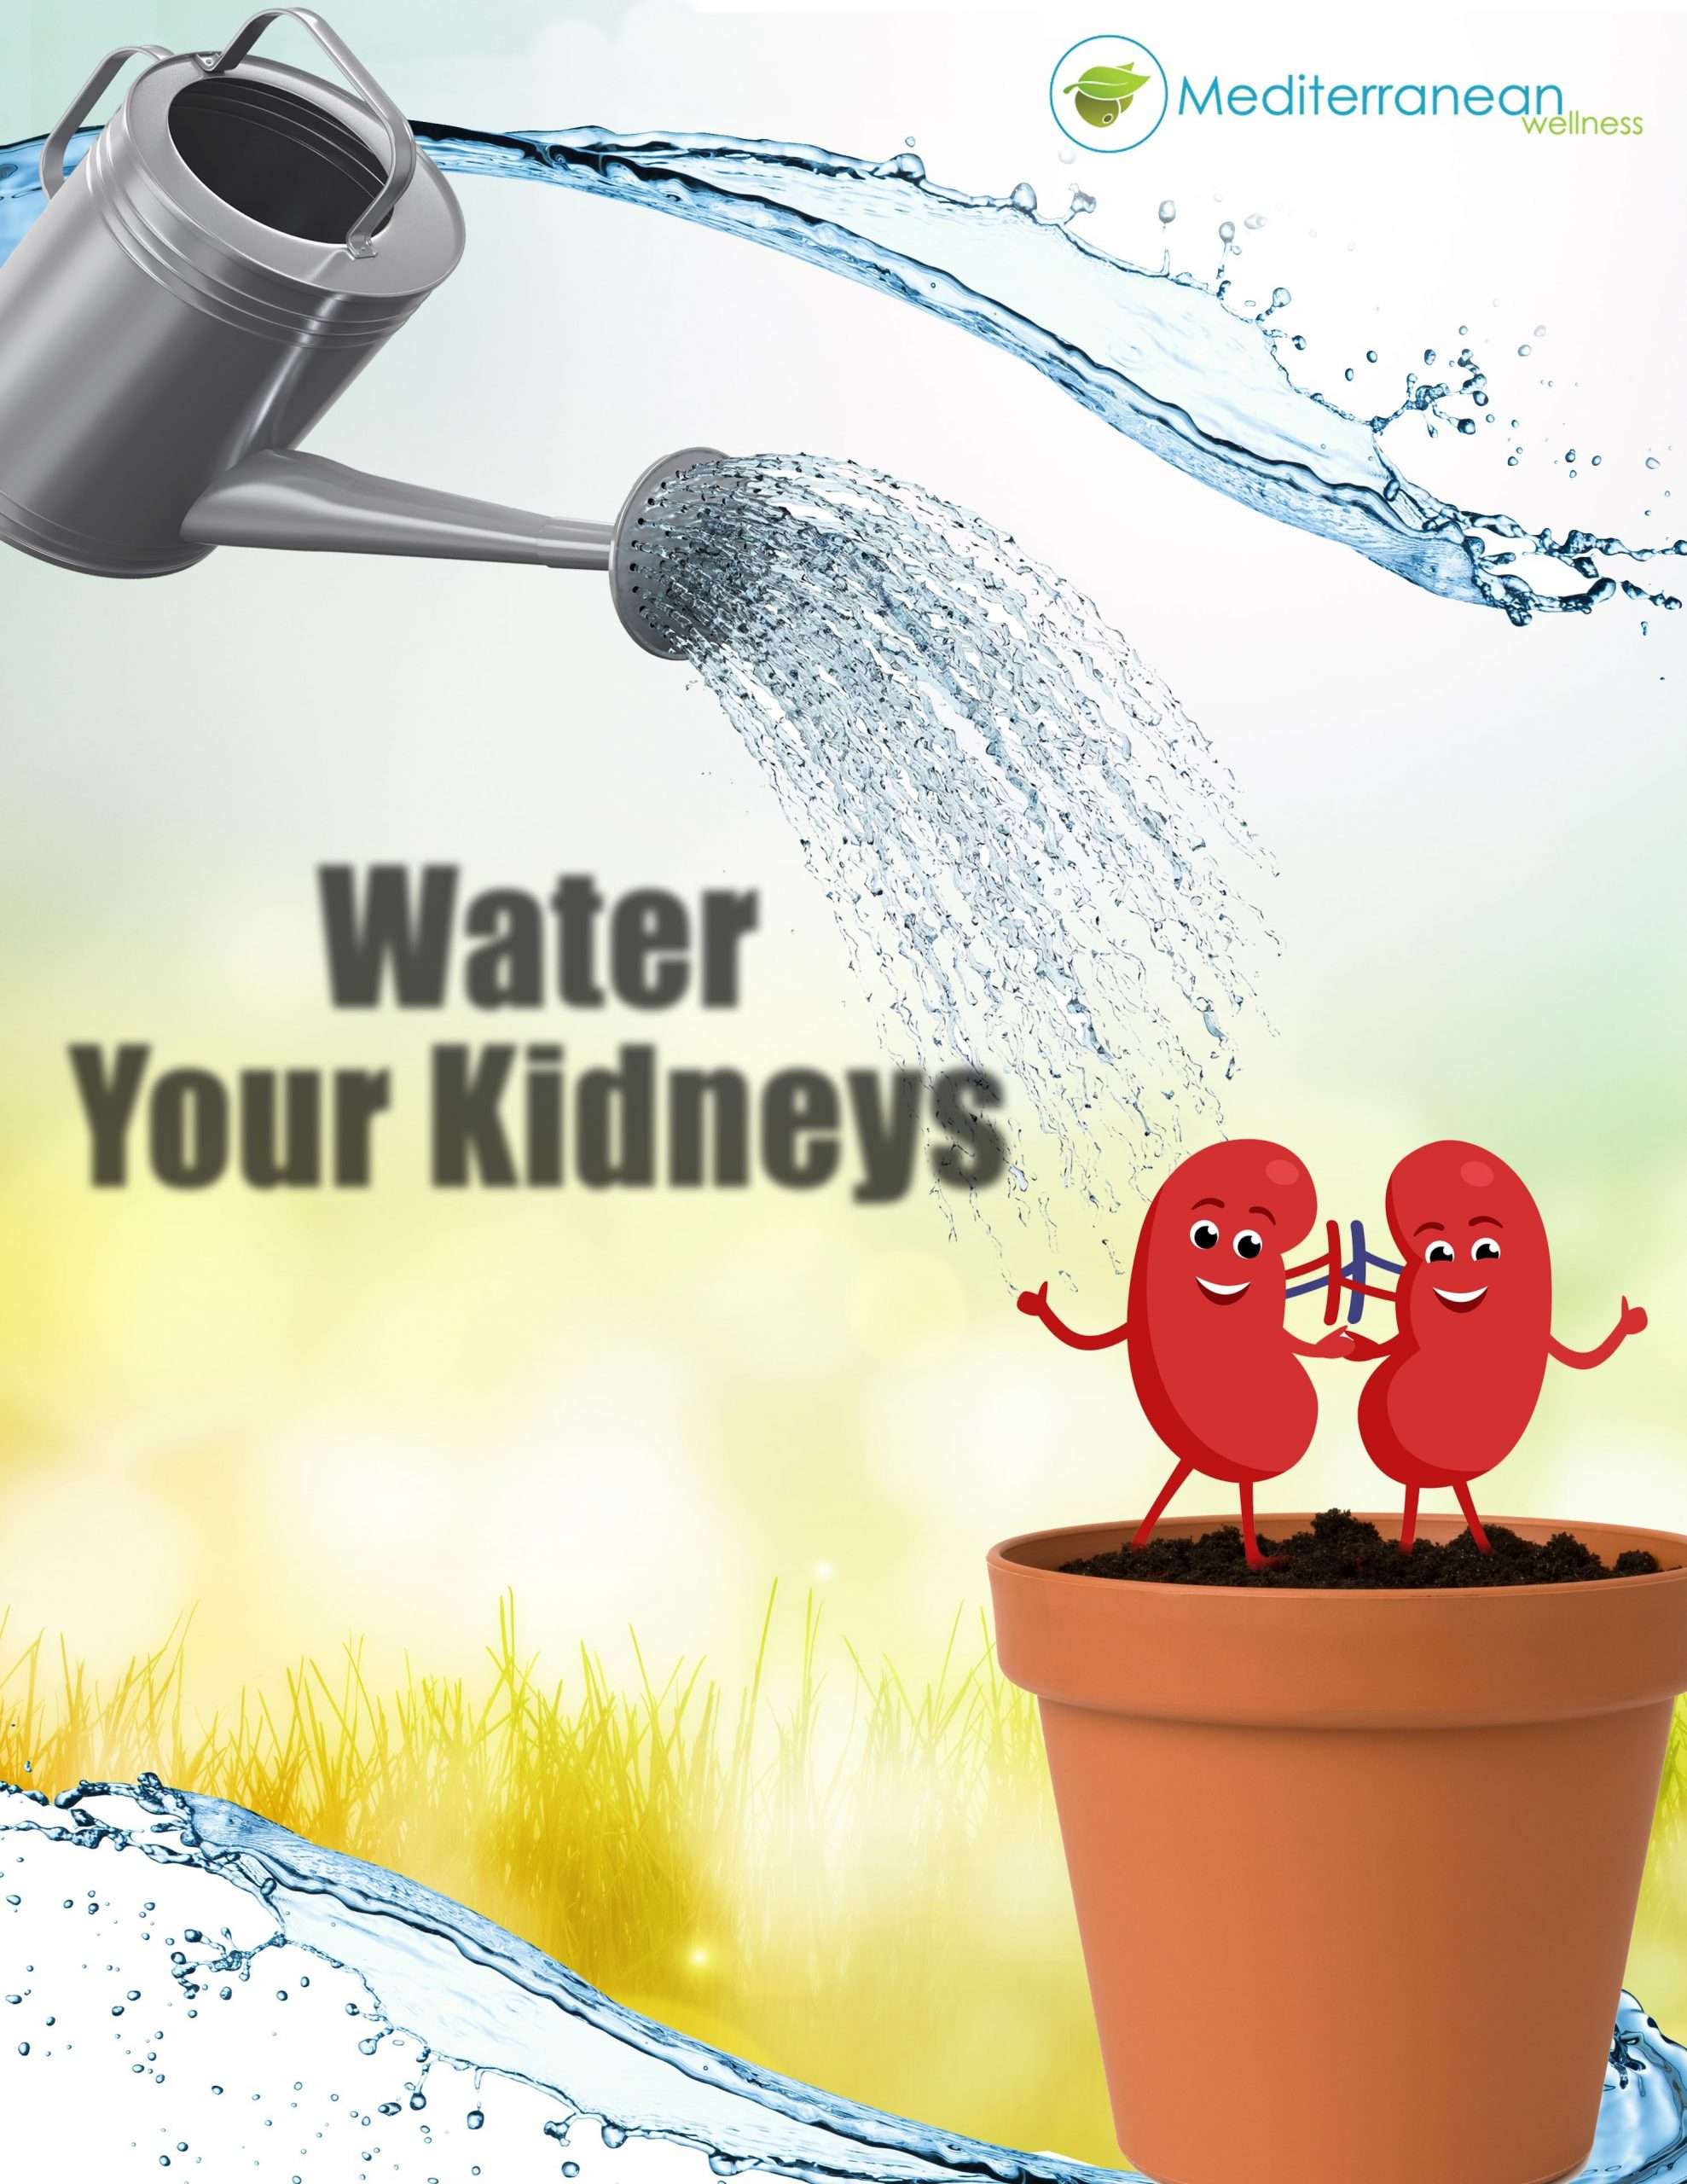 Water Your Kidneys  Mediterranean Wellness blog